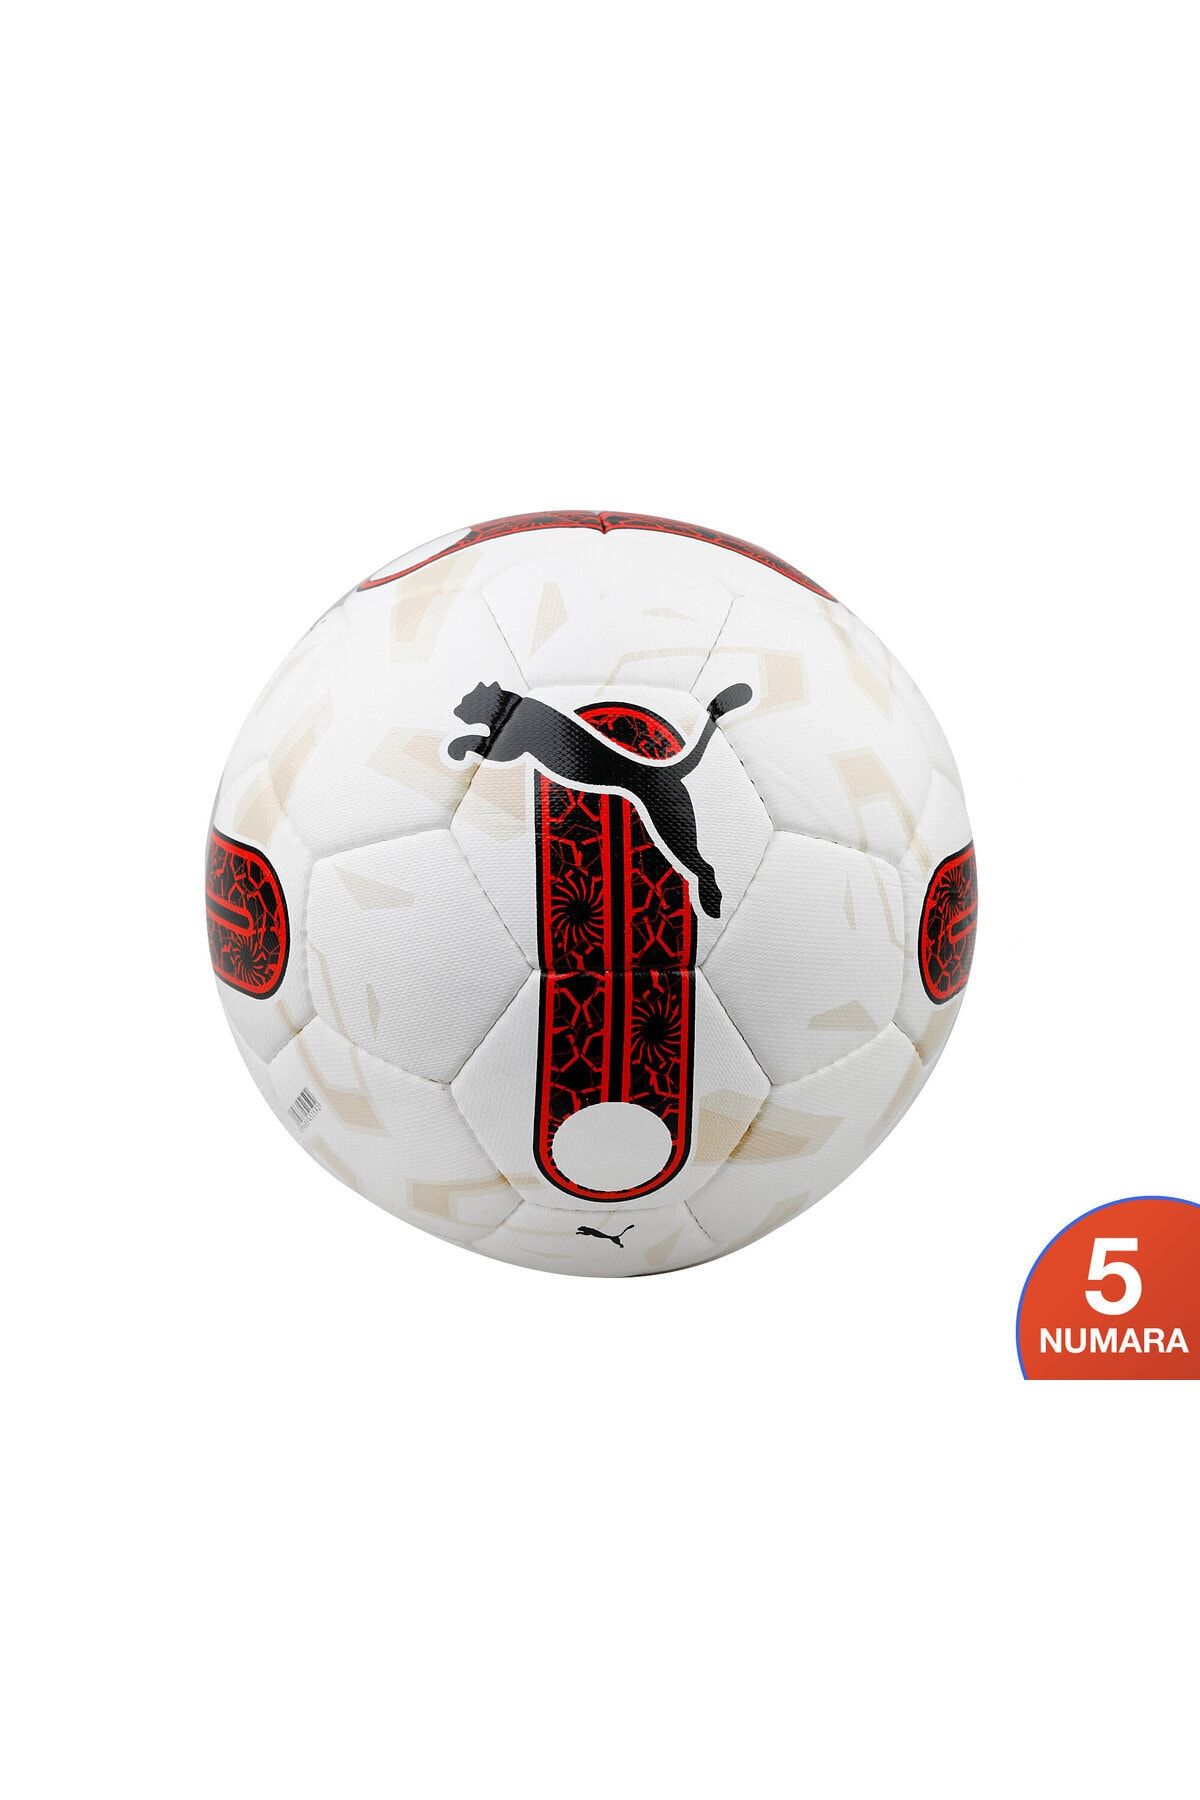 Puma Orbita Süper Lig 5 Hs Futbol Topu 8419701 Krem